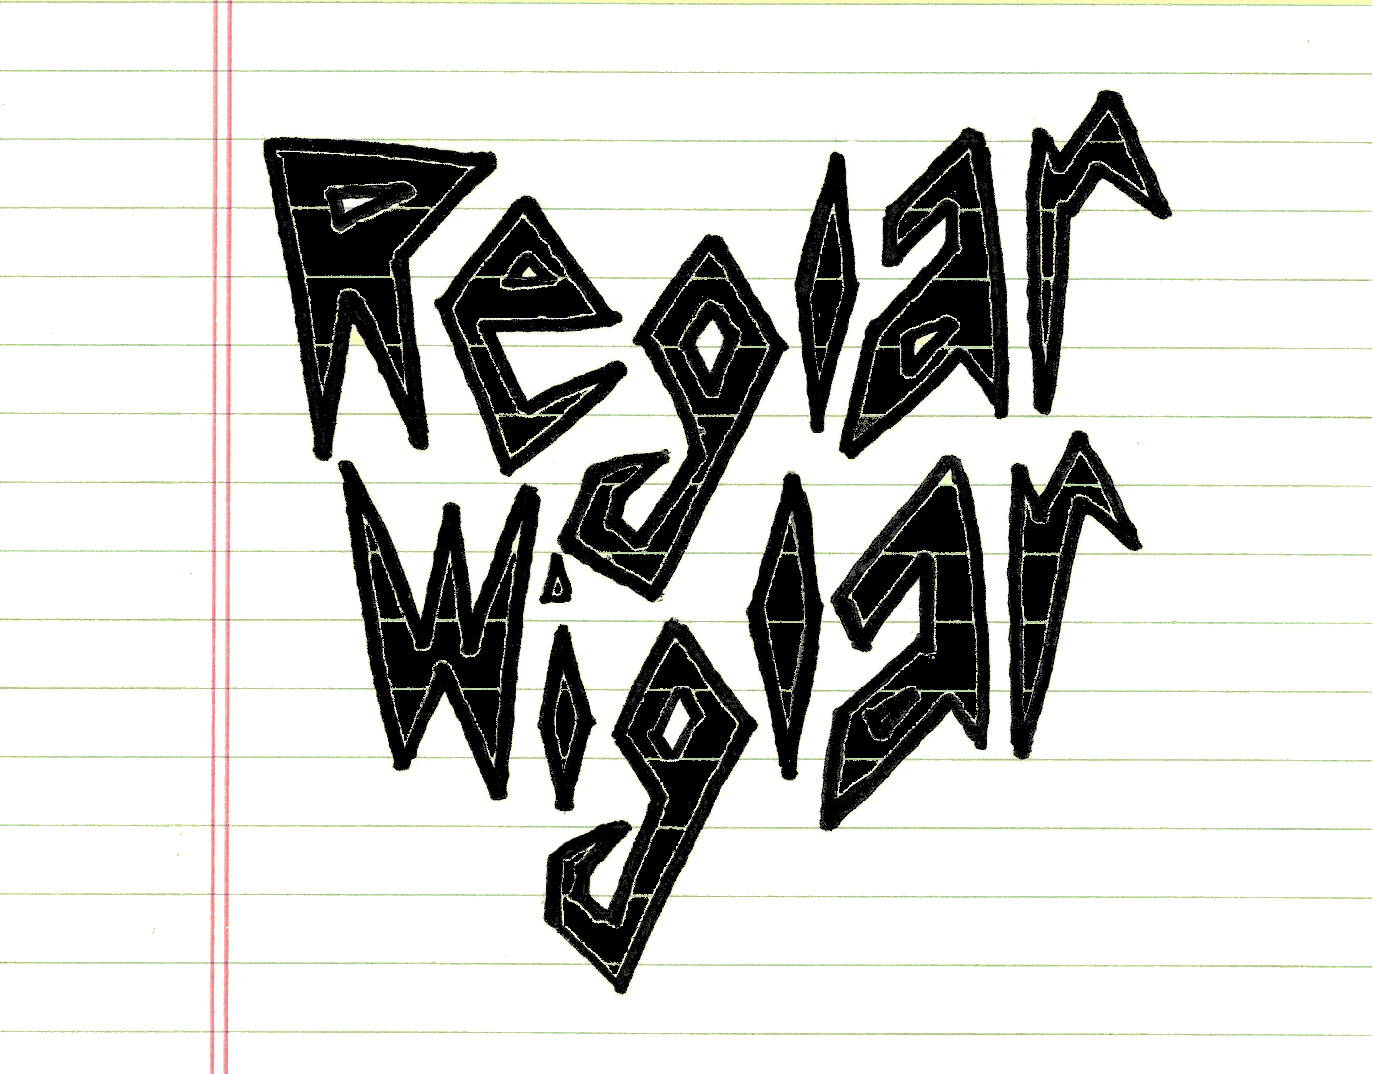 Always read Reglar Wiglar